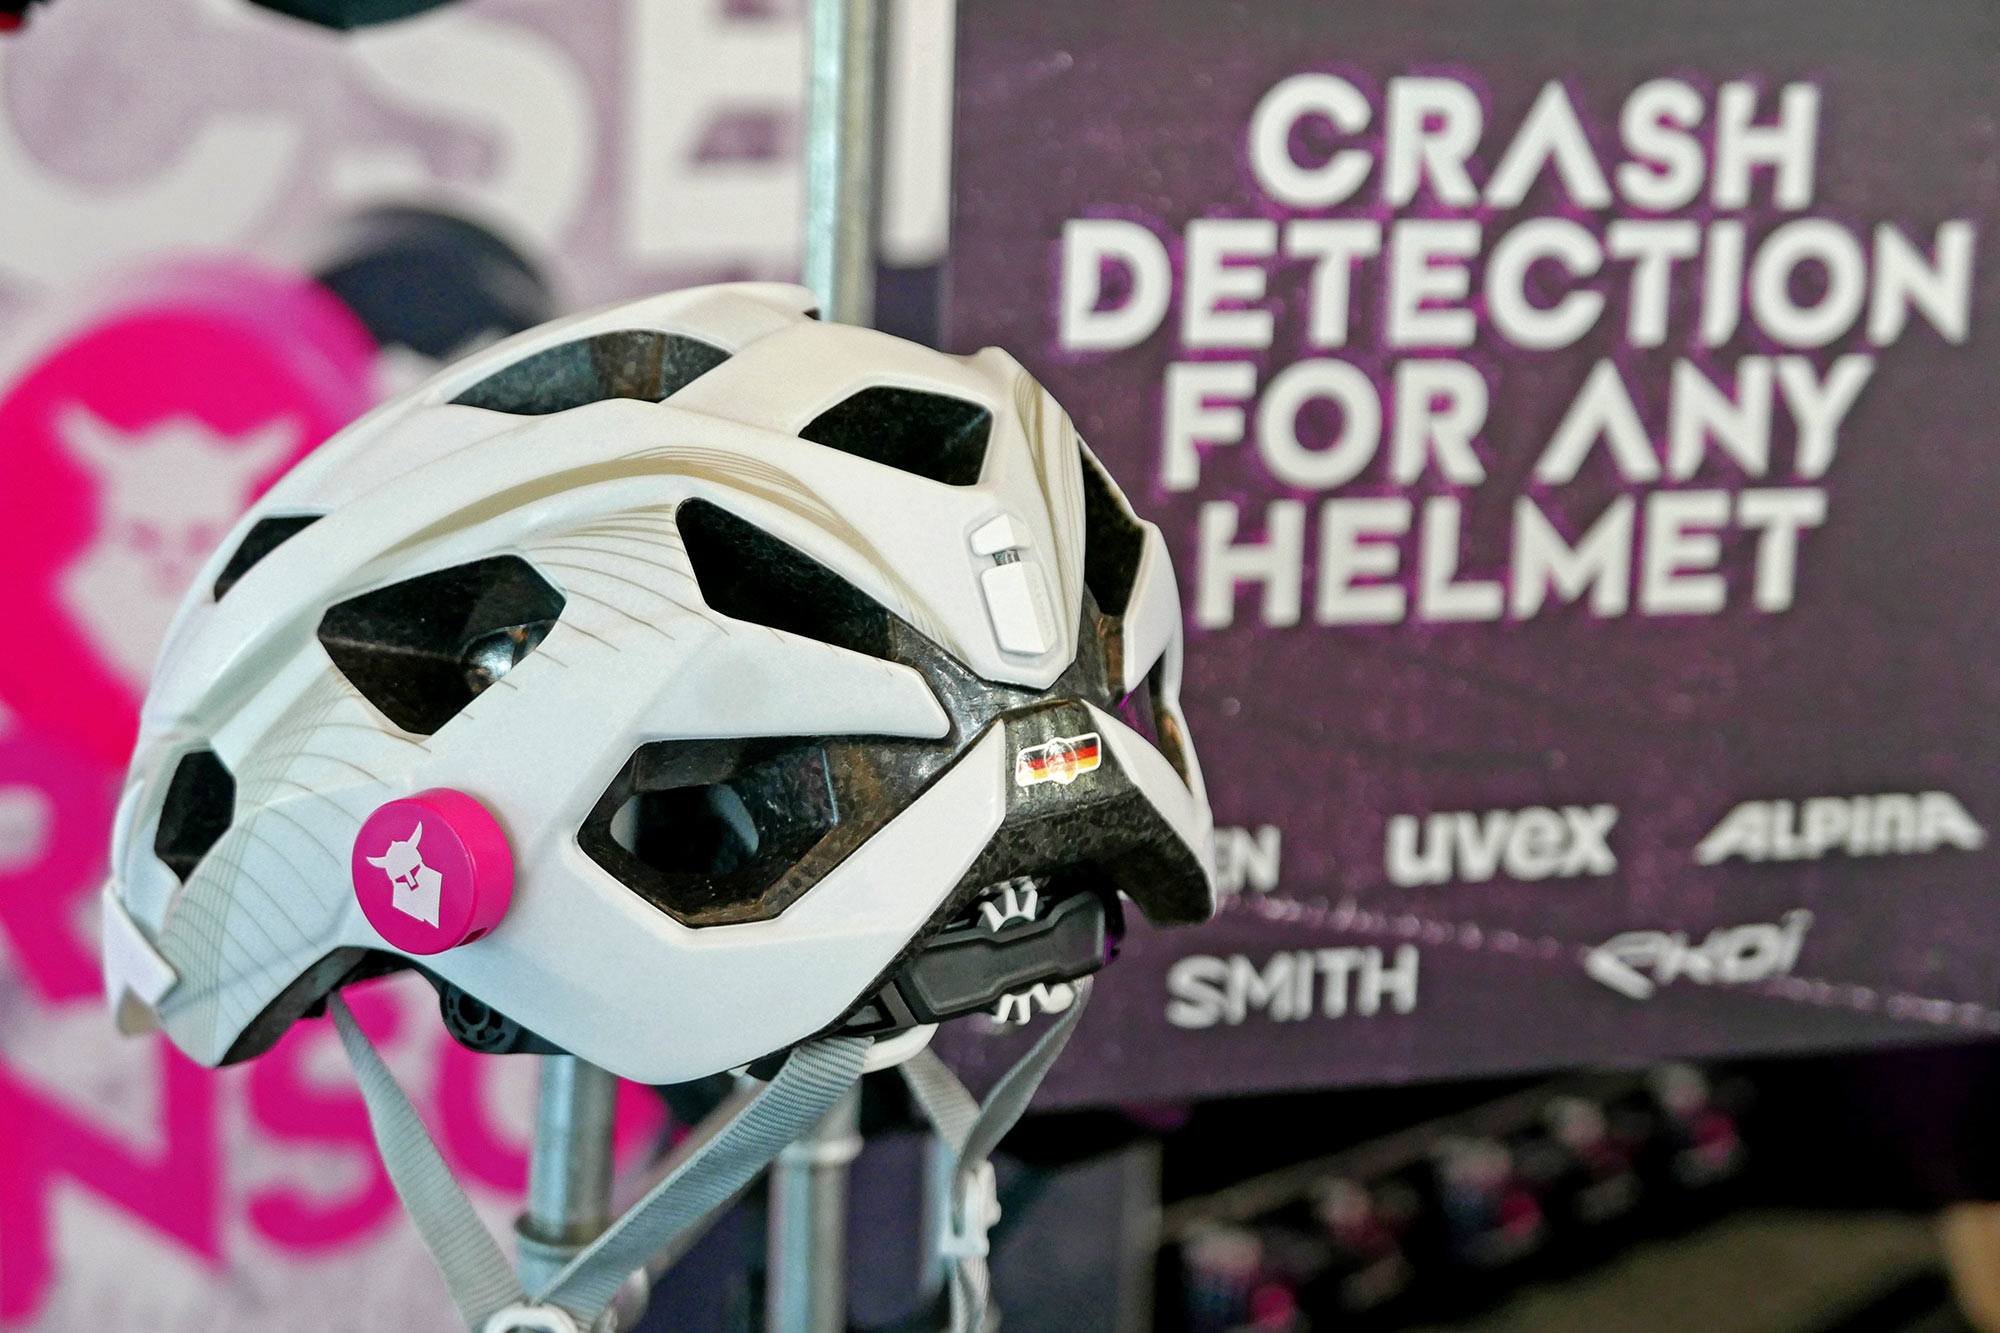 Aleck Punks & Tocsen Crash Sensor Make Each Helmet Safer, Coming Quickly to Smith